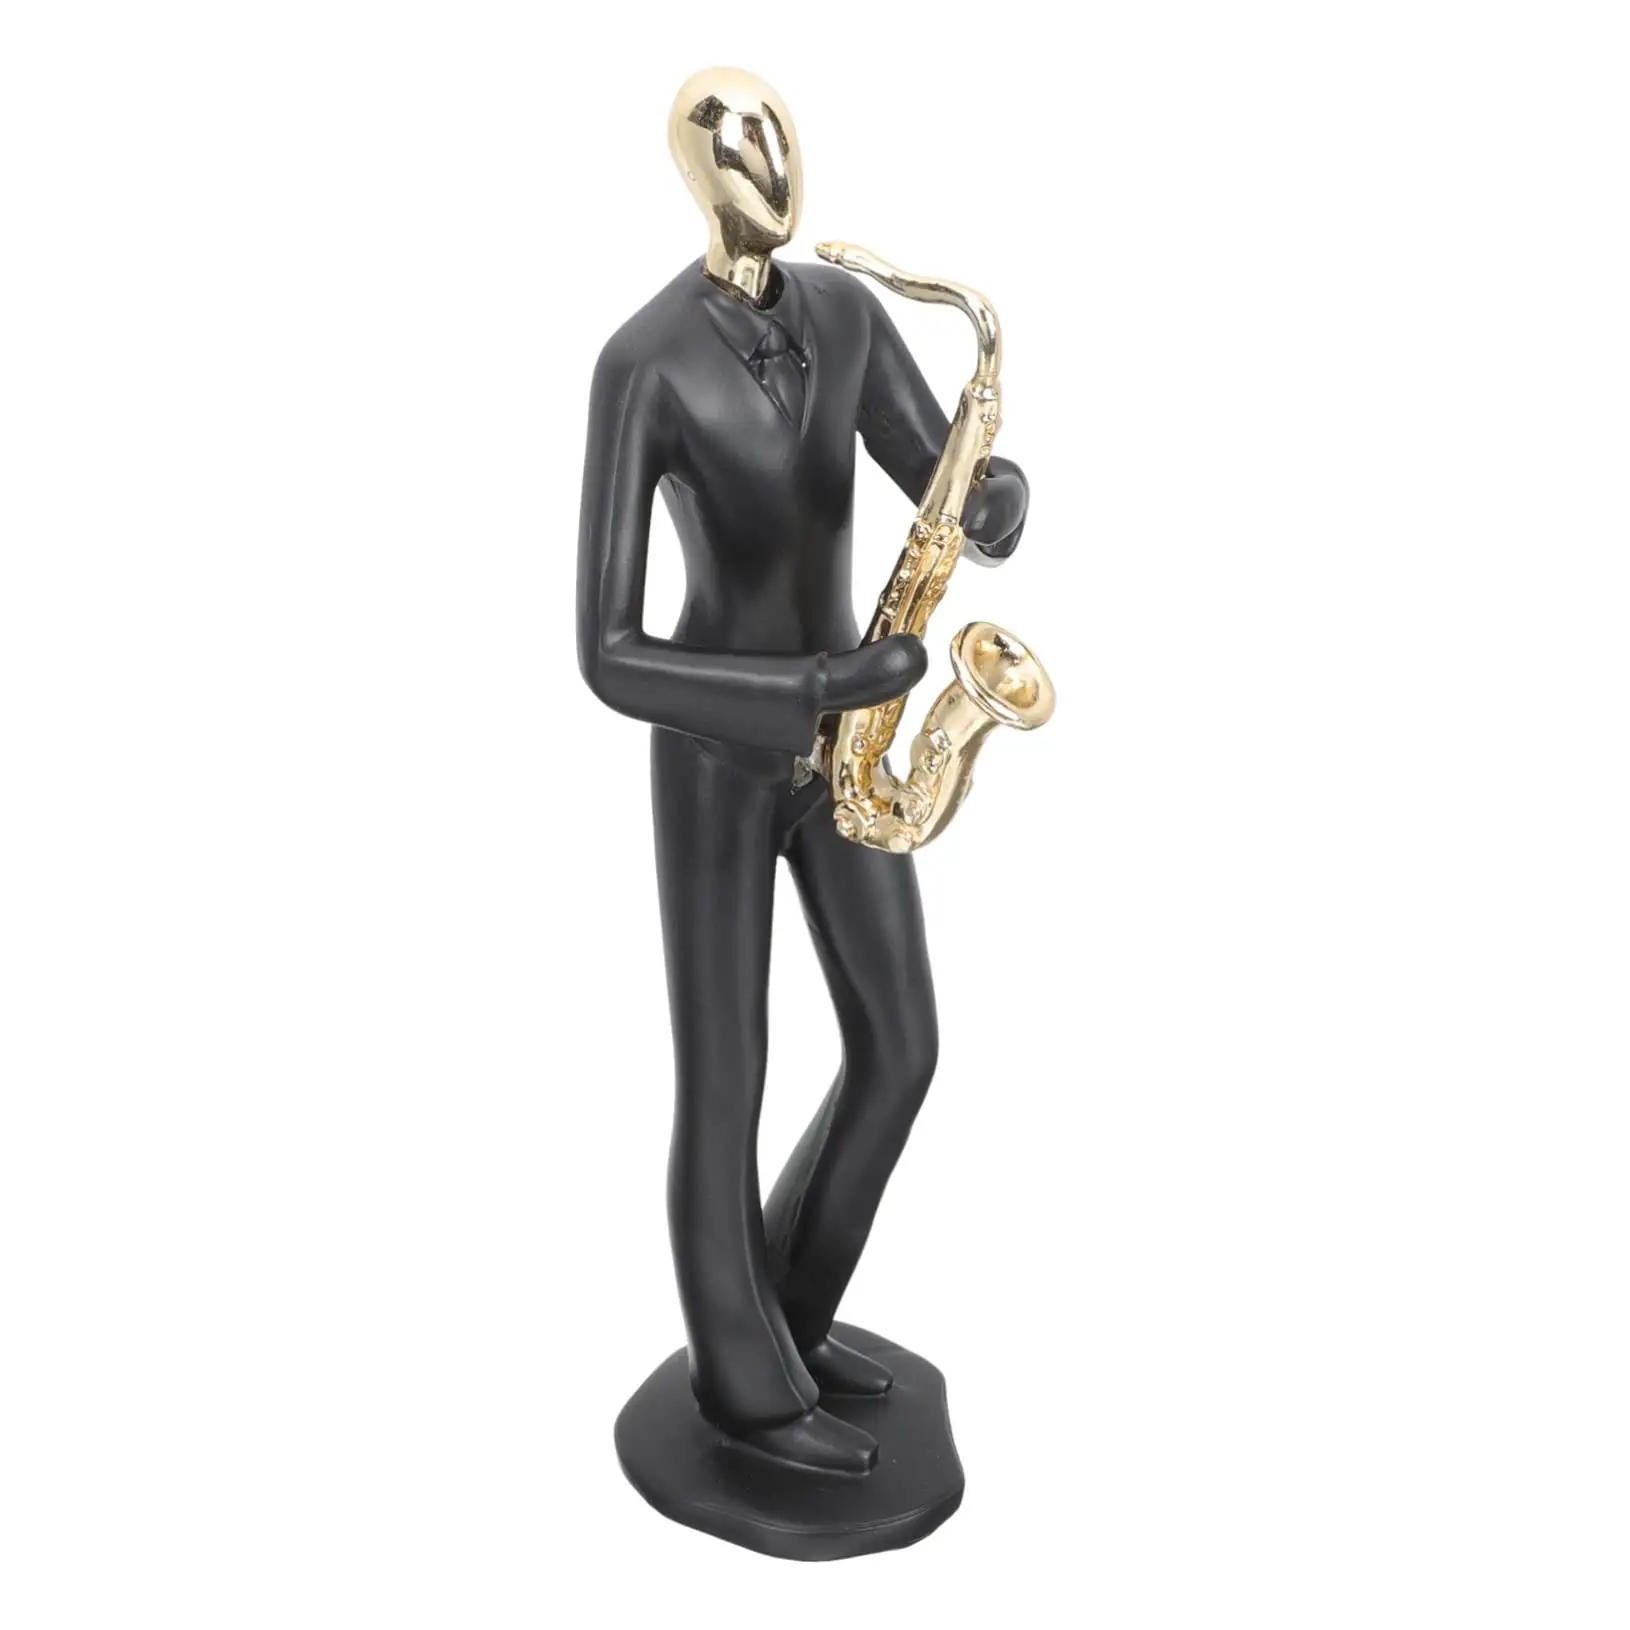 Harz-Band-Schmuck Trophy moderne abstrakte Heimdekoration Saxophon Musikinstrument Modell Souvenir-Schmuckfigur